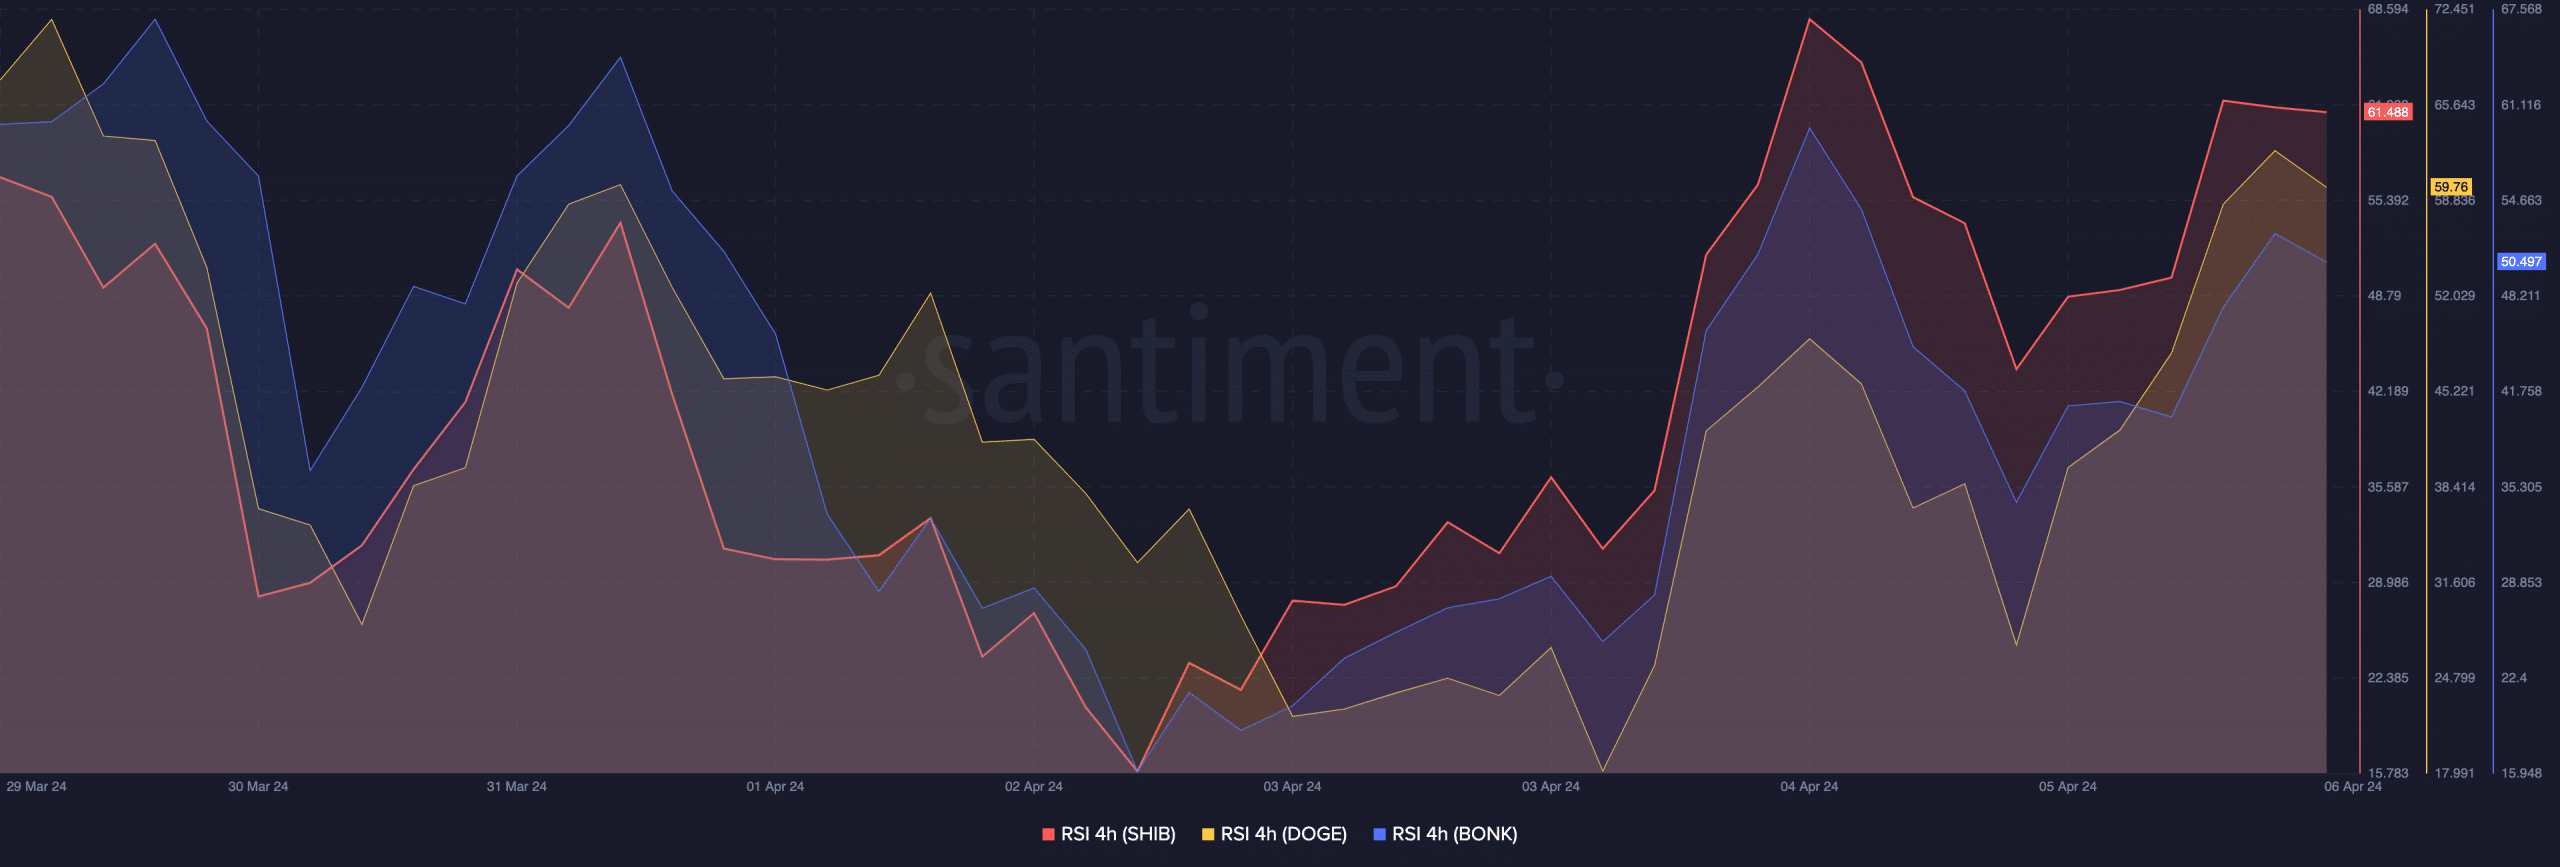 The RSI of SHIB, DOGE, and BONK showing bullish momentum